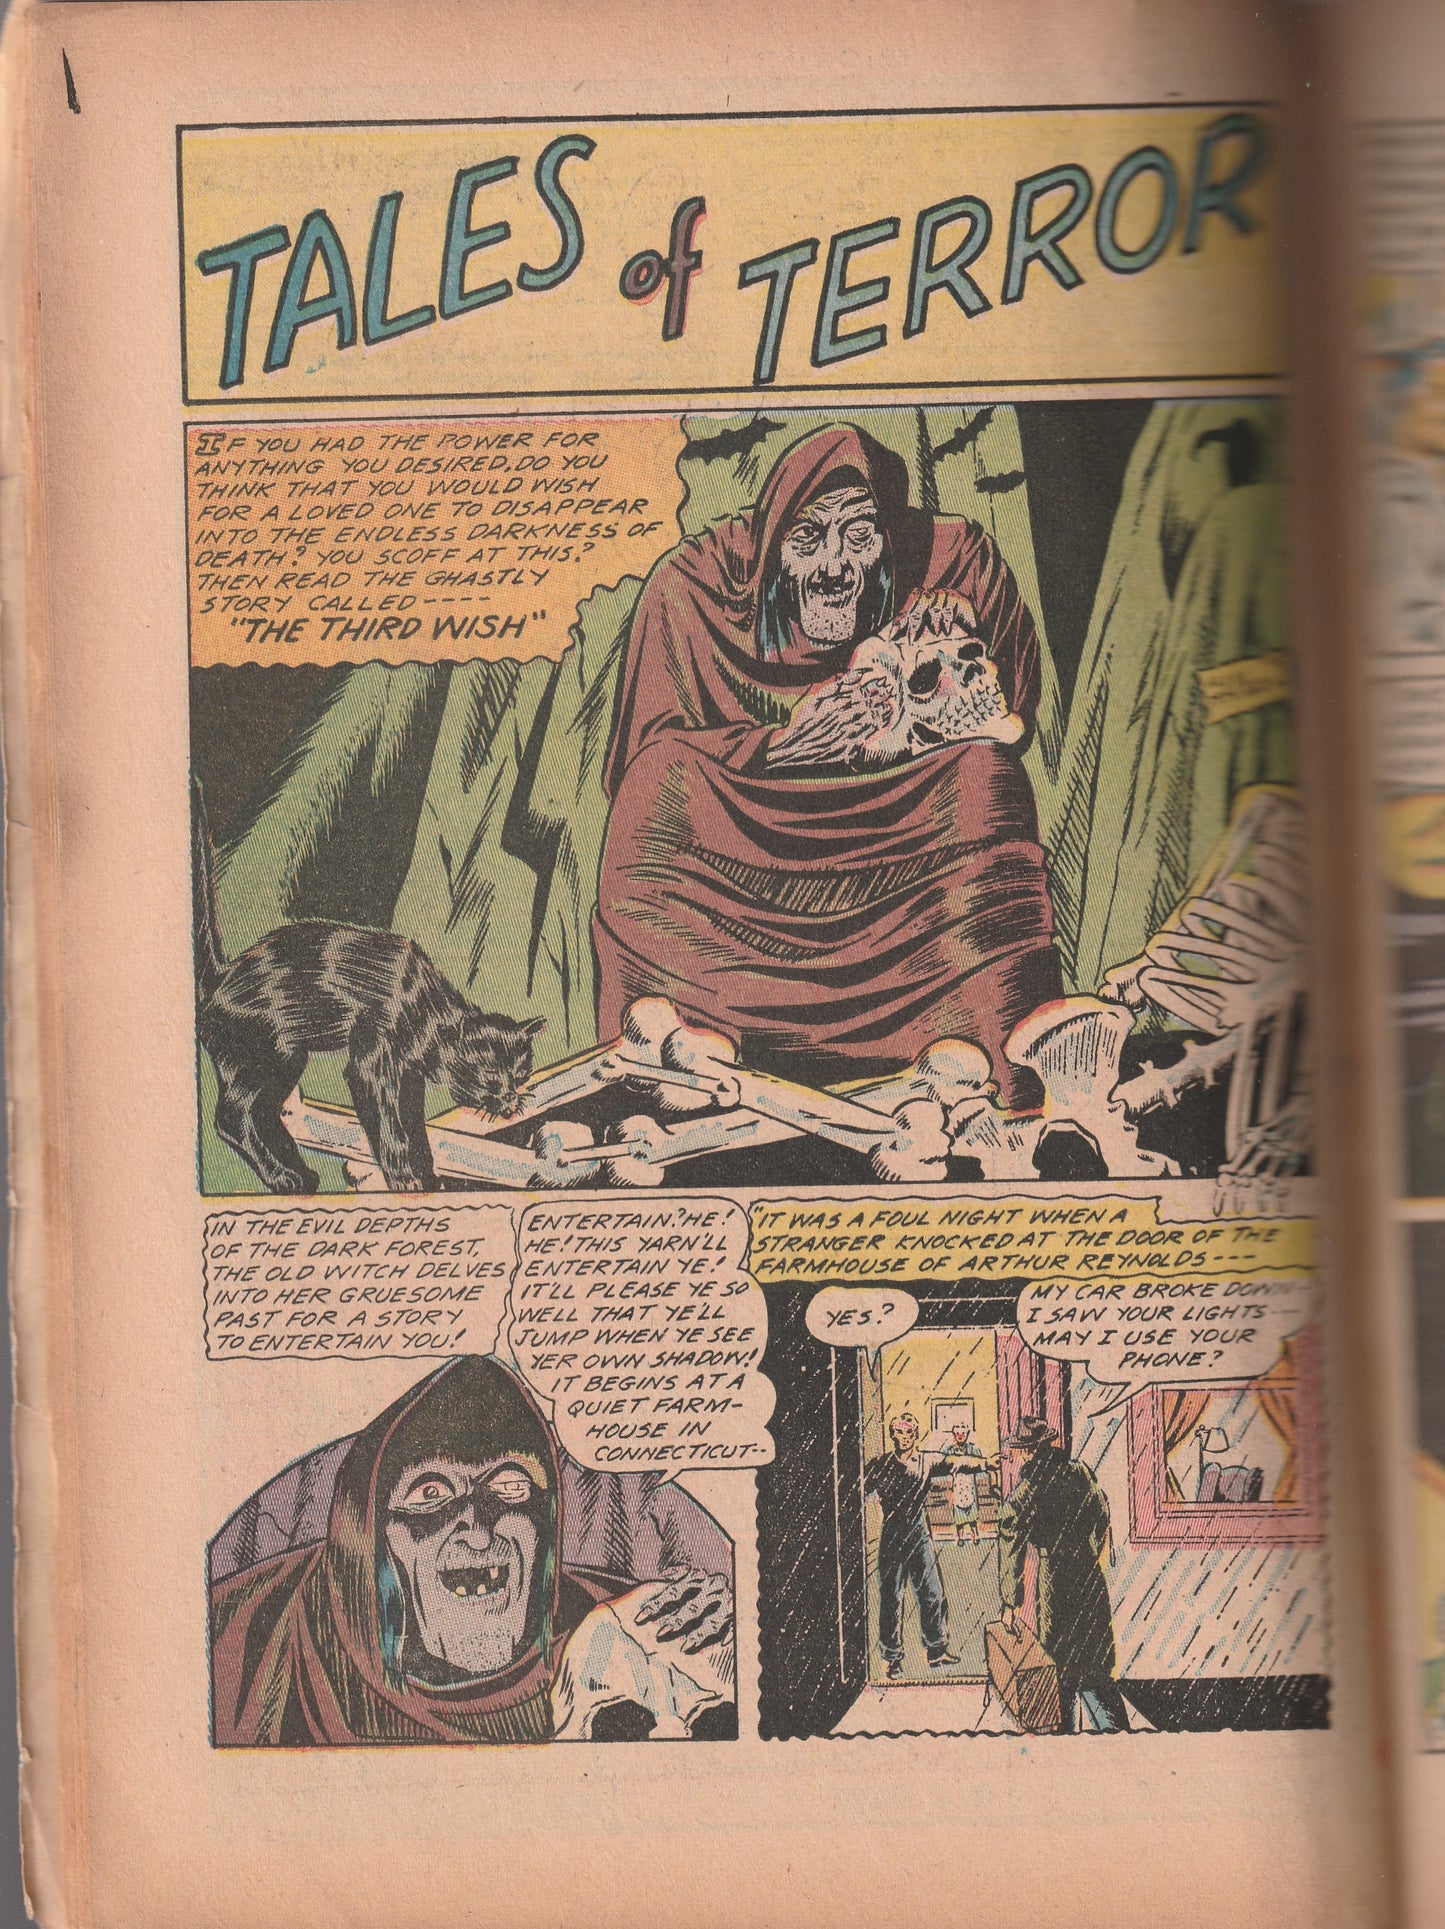 YellowJacket Comics #8 (1946) - Tales of Terror